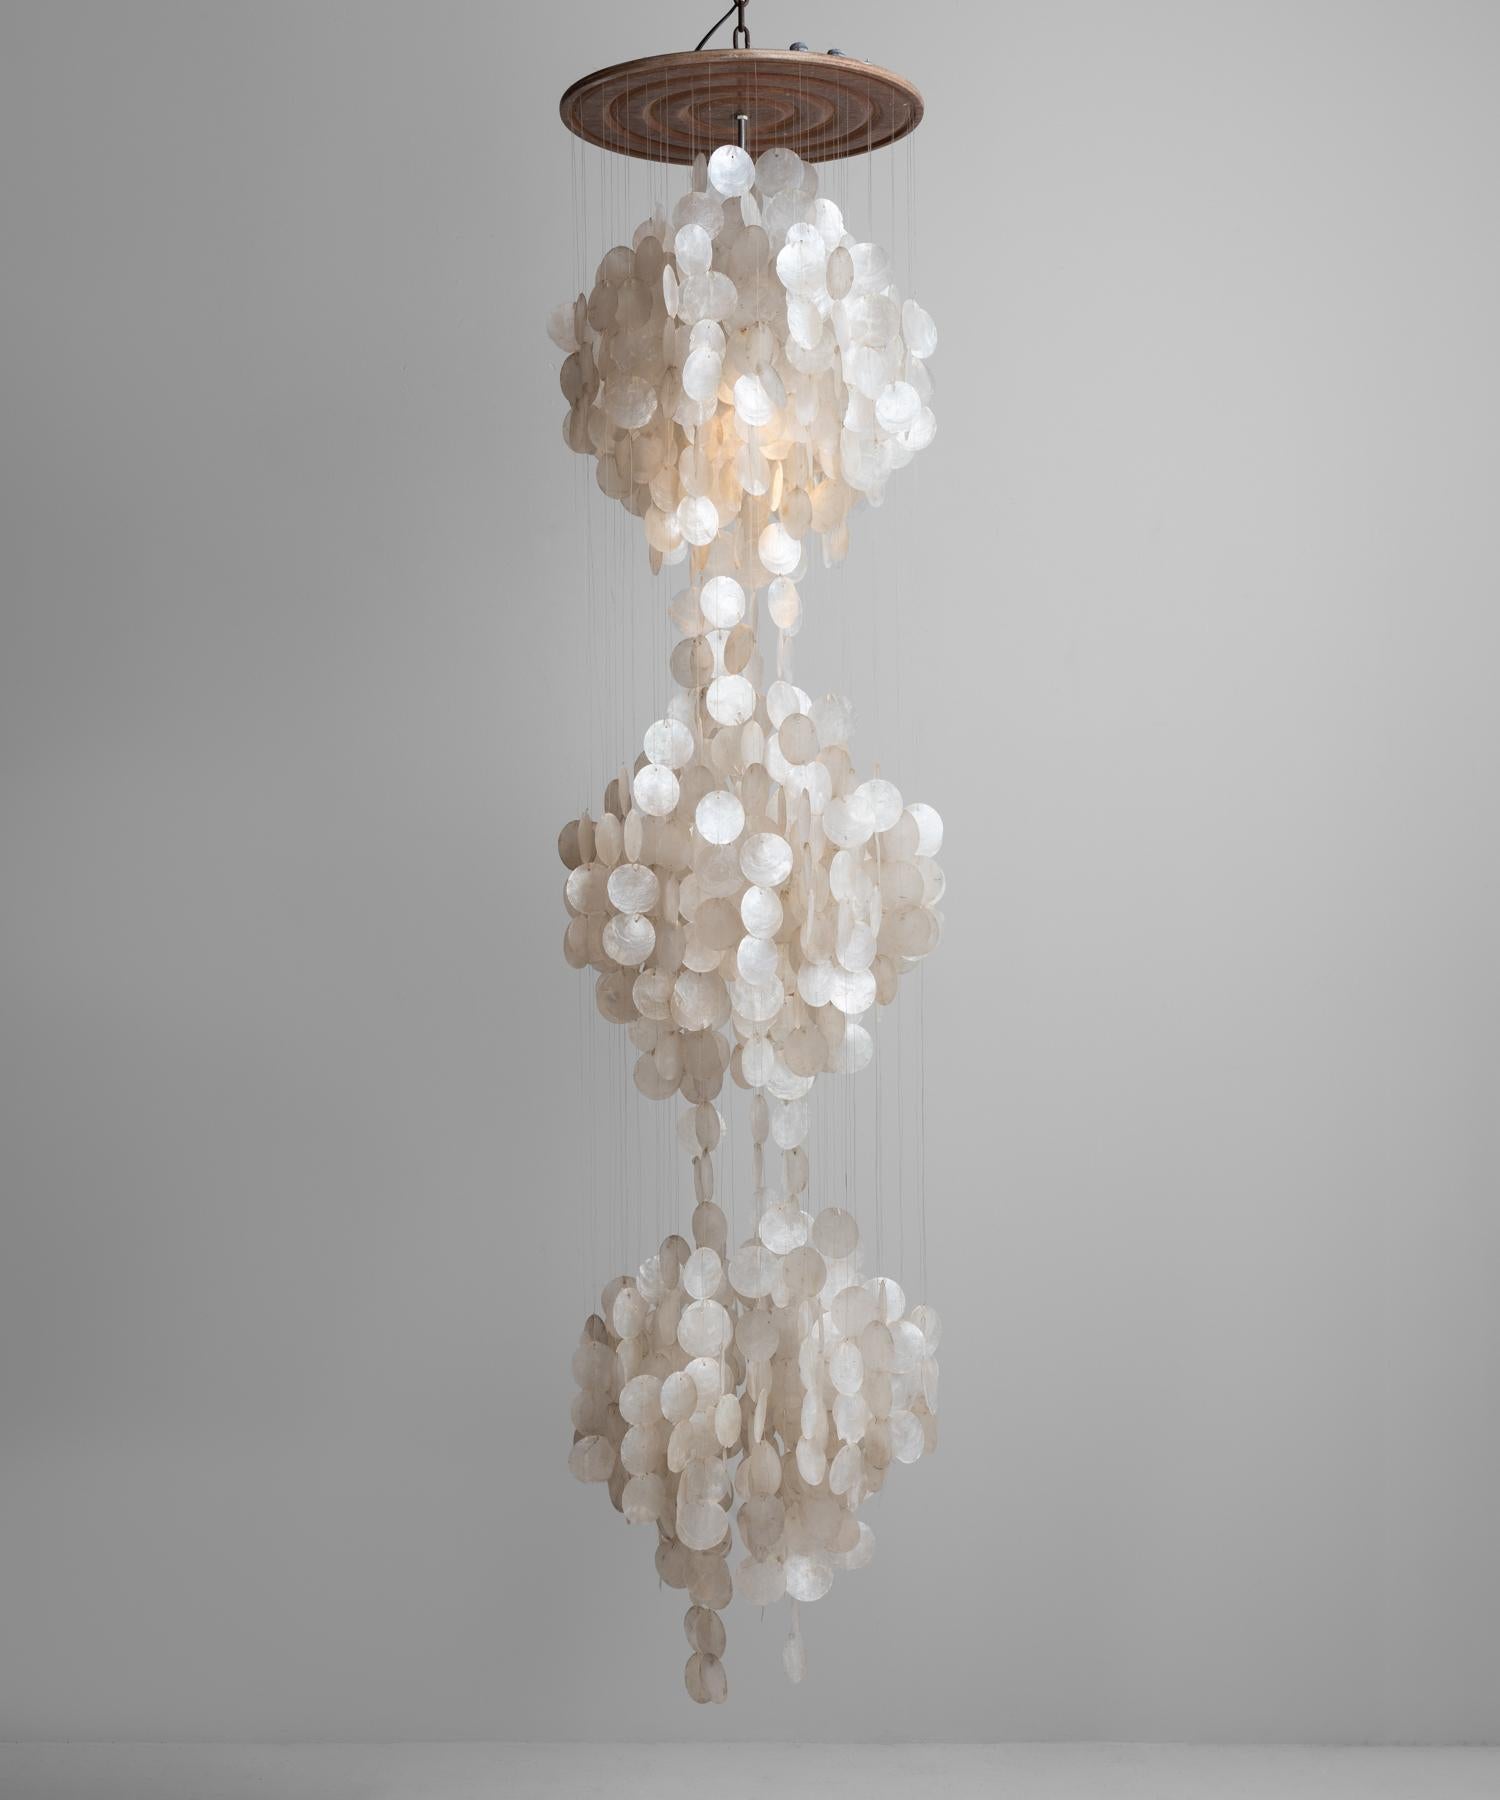 Fun 3DM chandelier by Verner Panton, Denmark, circa 1960.

Elegant, cascading capiz shell chandelier.